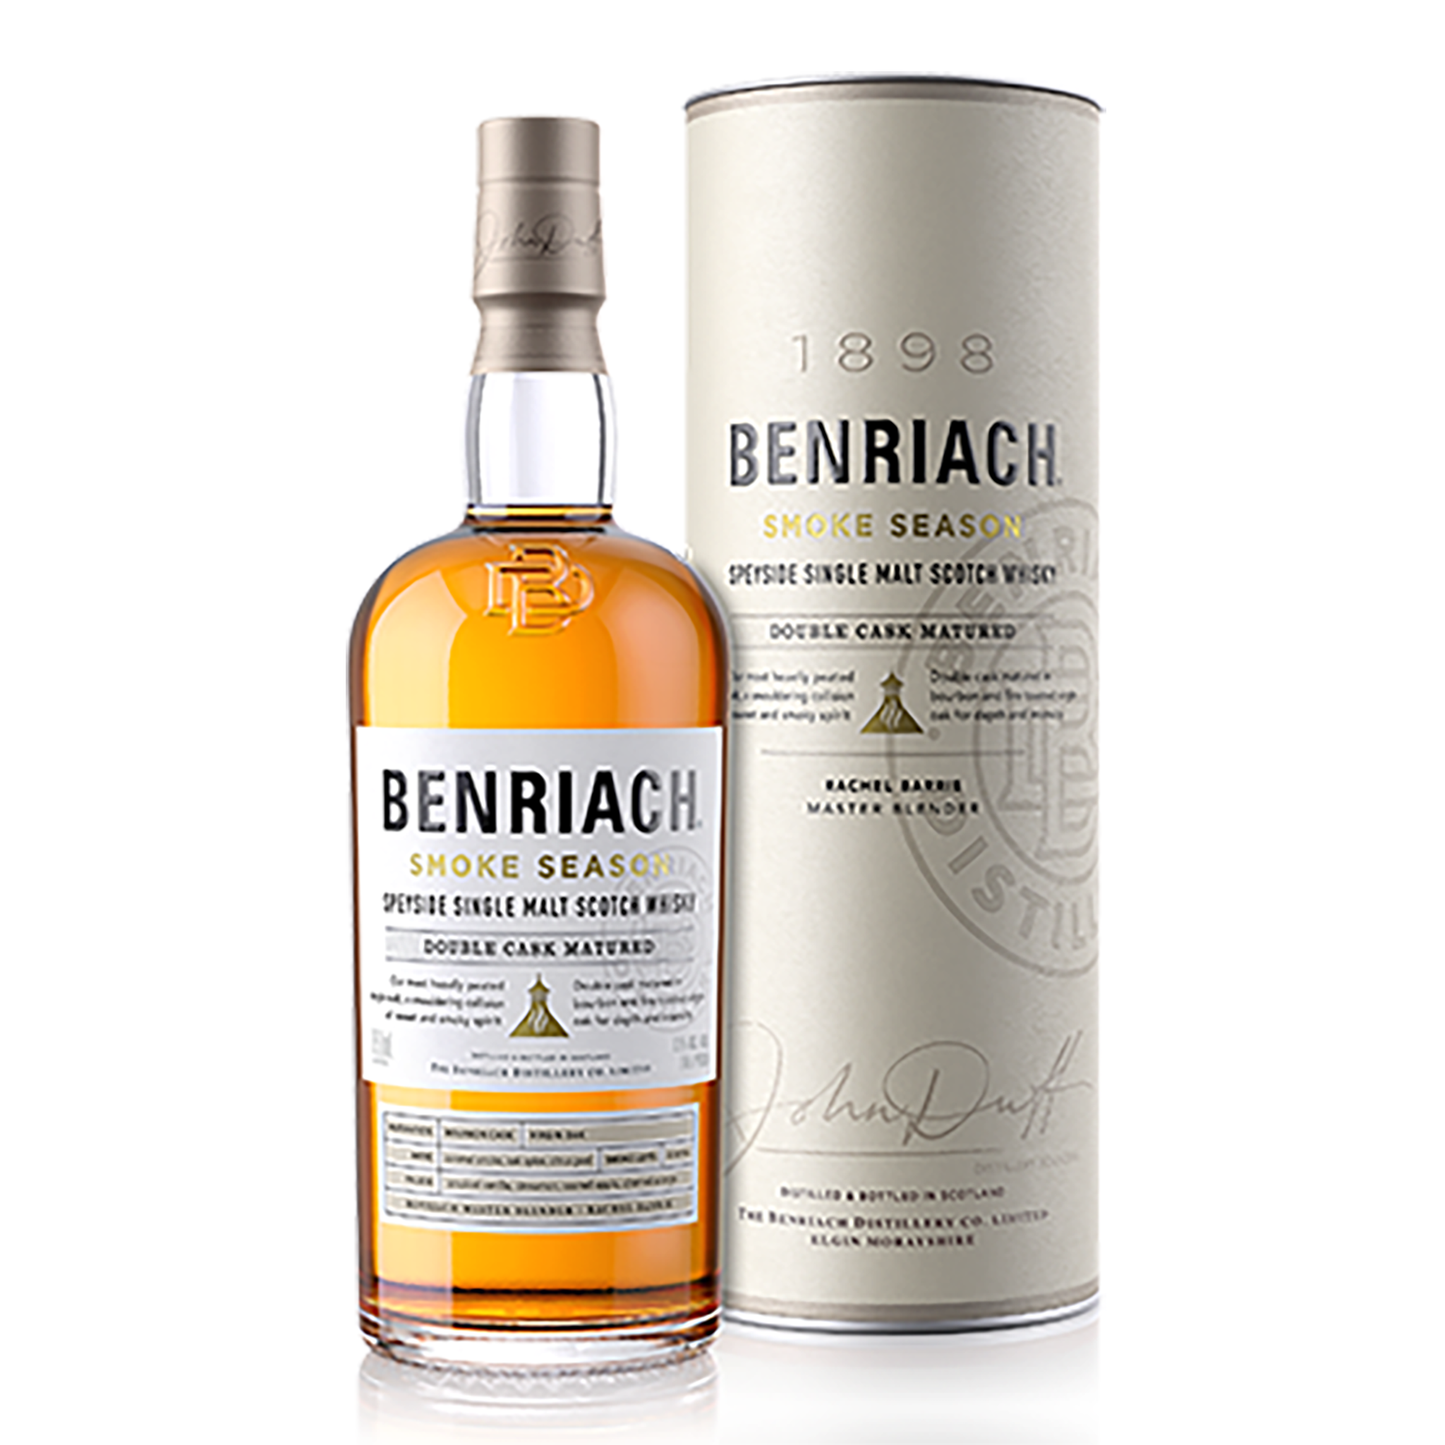 Benriach Smoke Season Single Malt Scotch Whisky 700ml